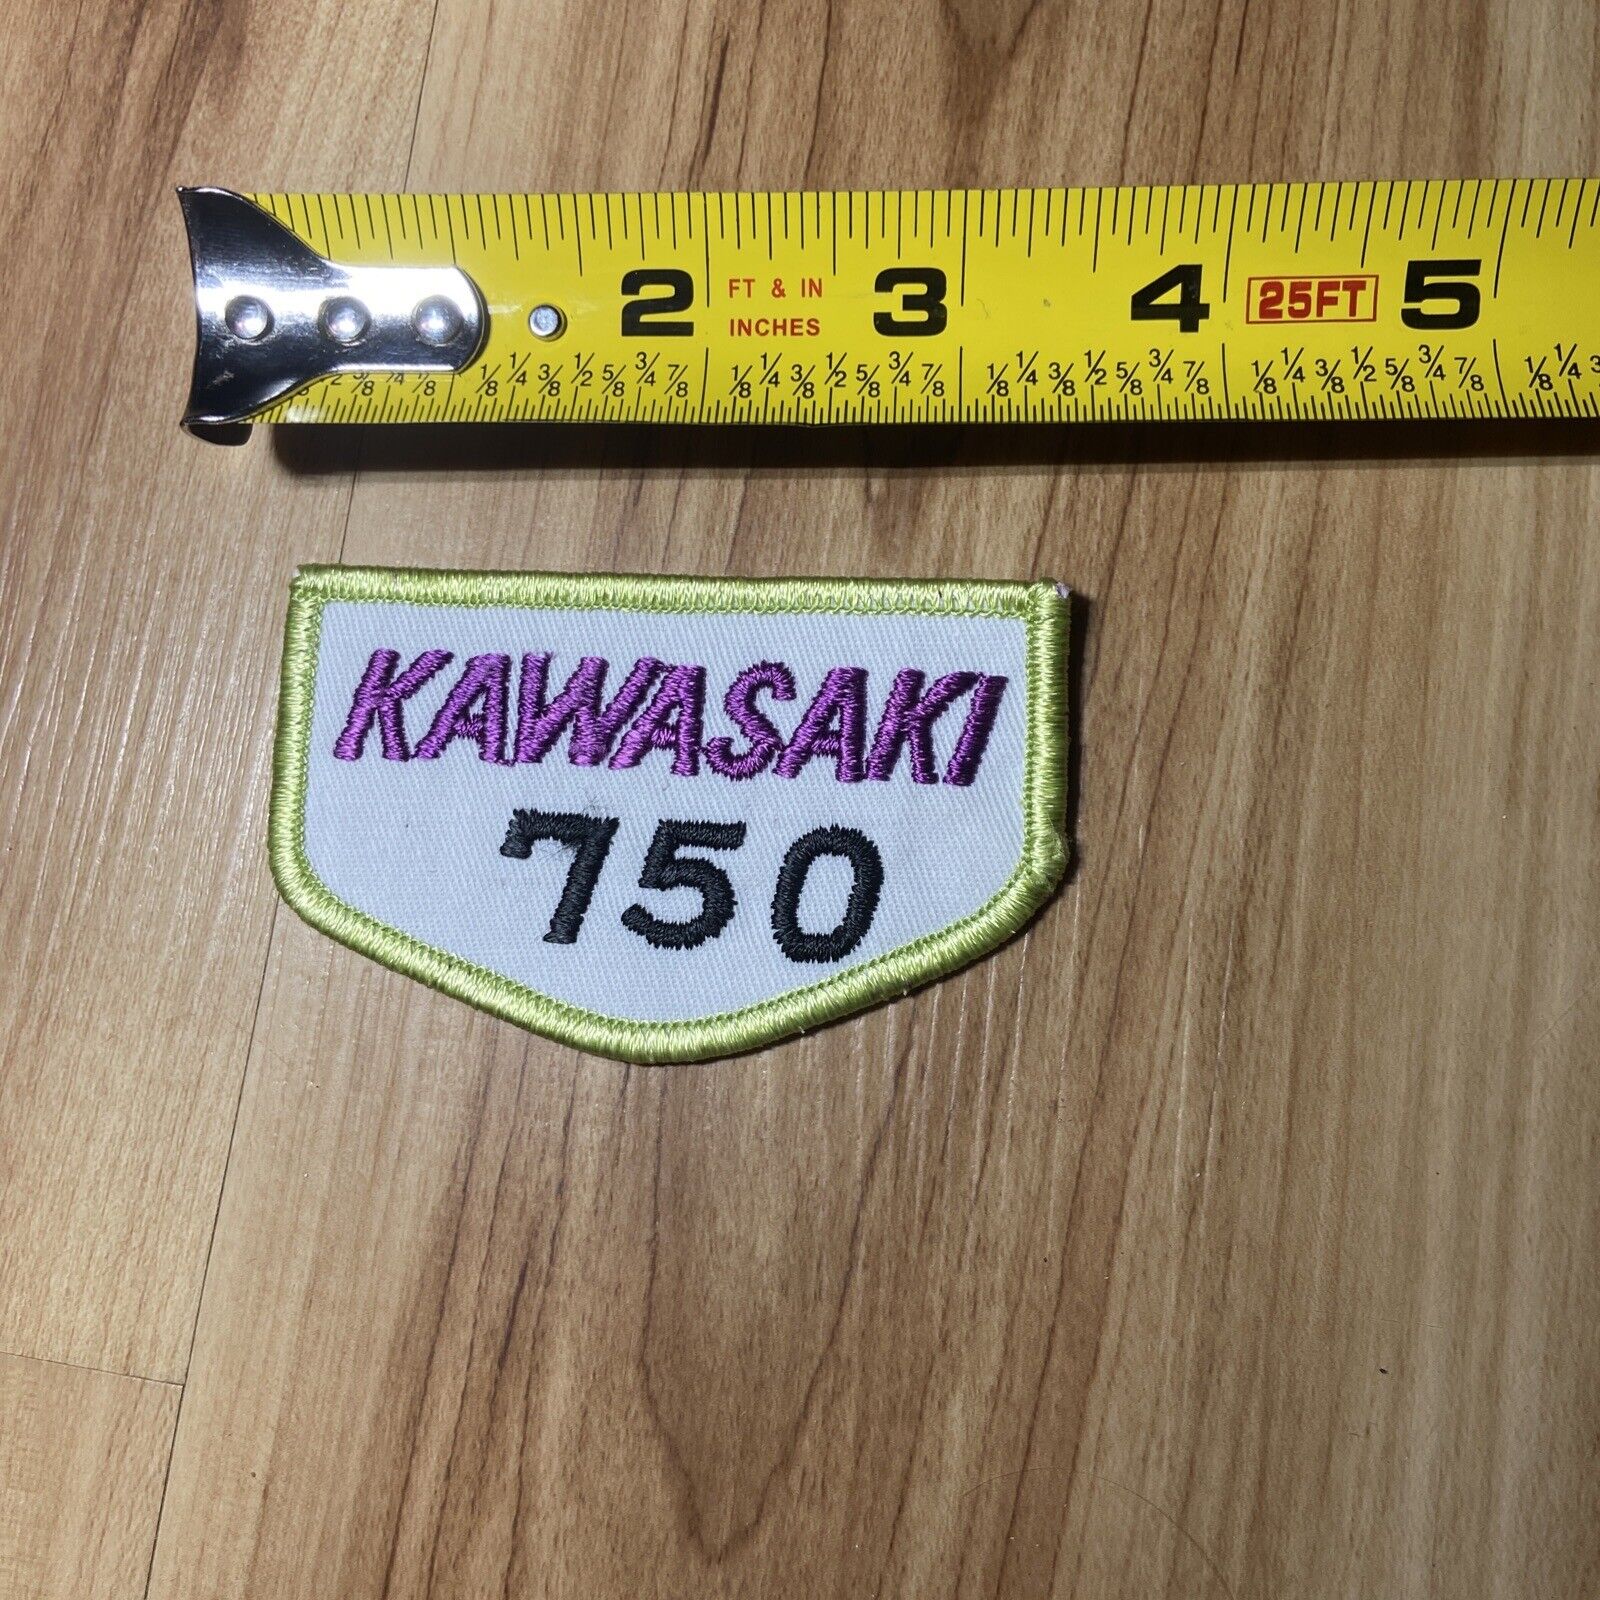 NOS Vintage Kawasaki 750 Patch